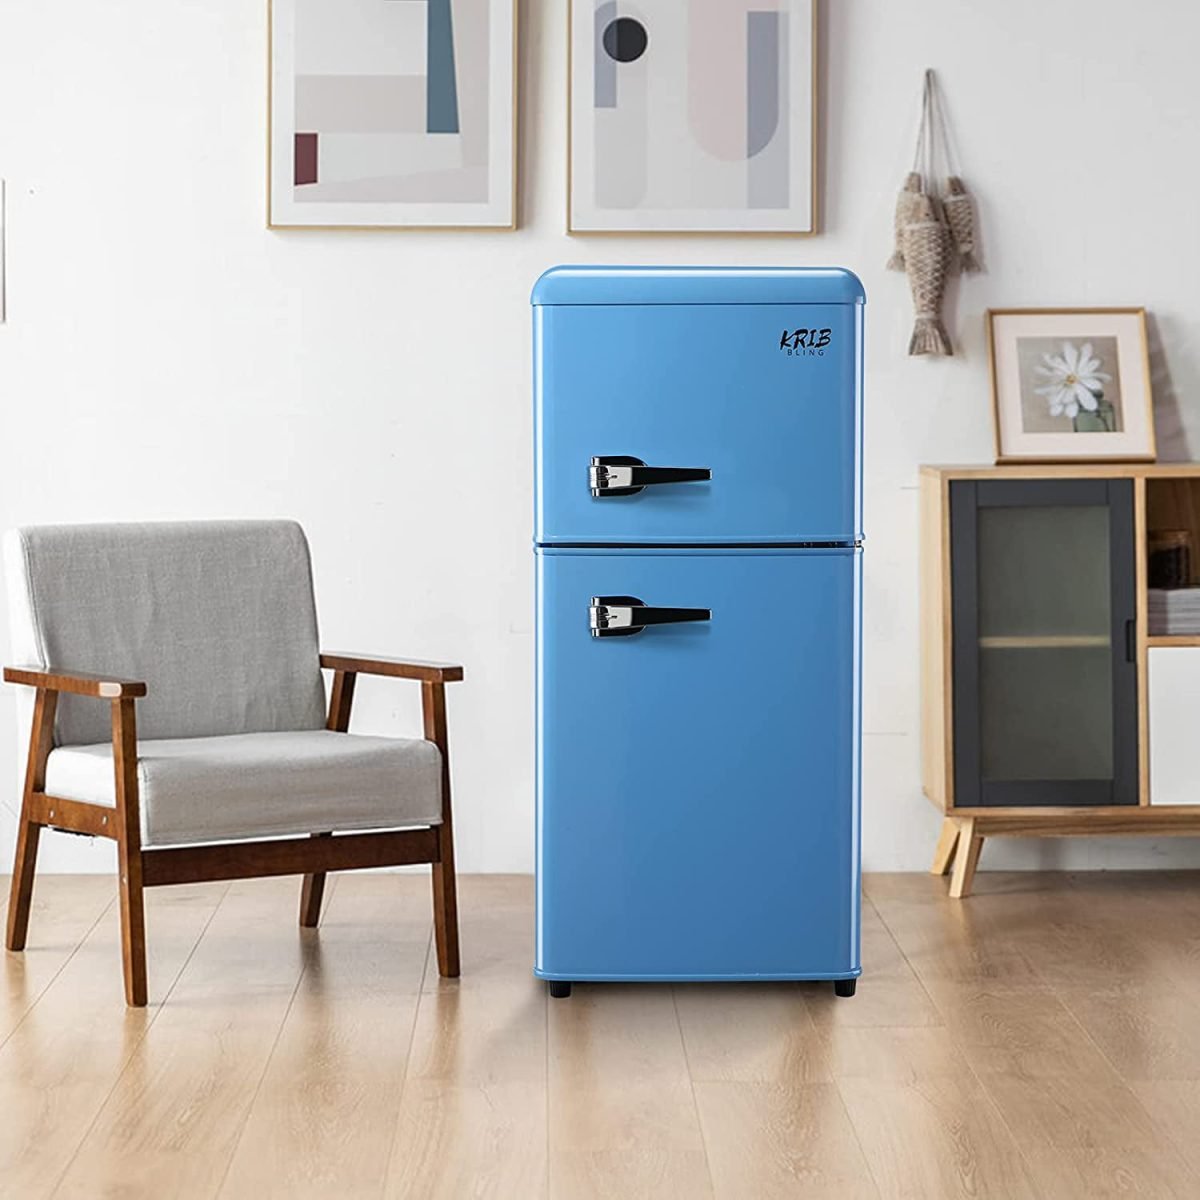 Krib Bling 3.5 cu.ft Compact Refrigerator, Retro Mini Fridge with ...